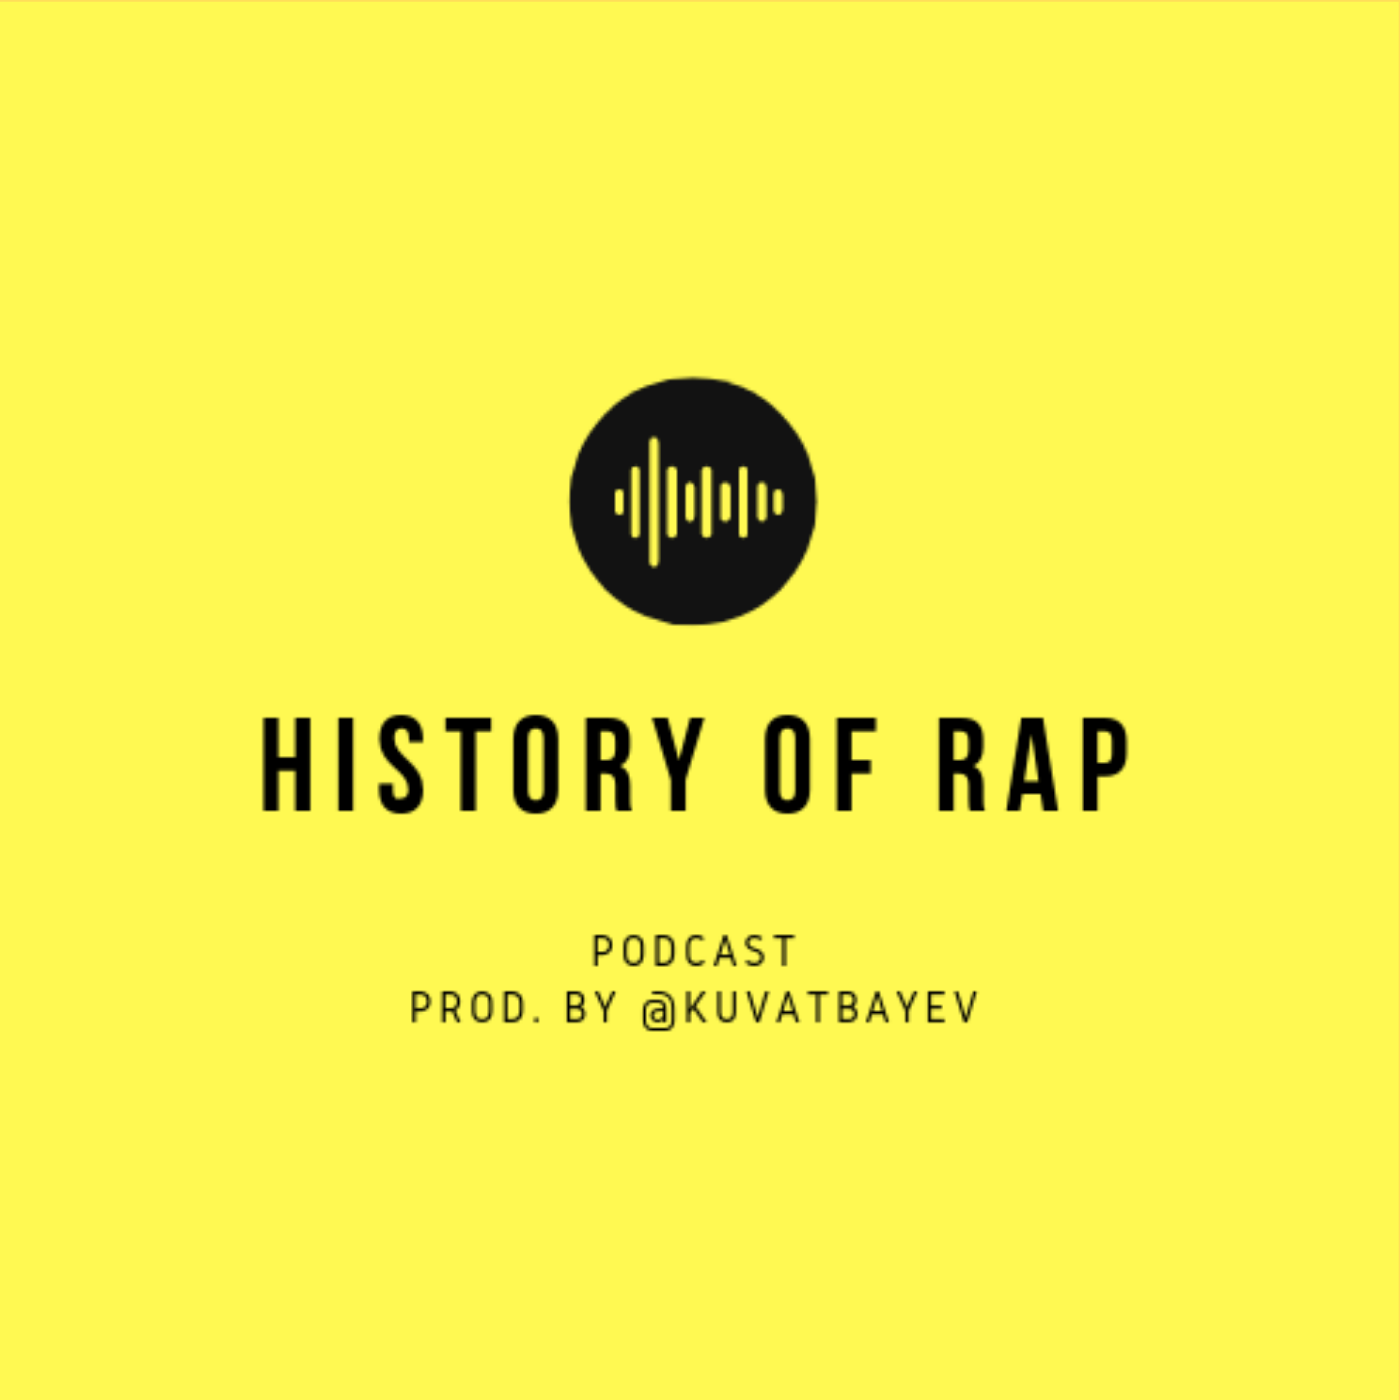 History of Rap podcast